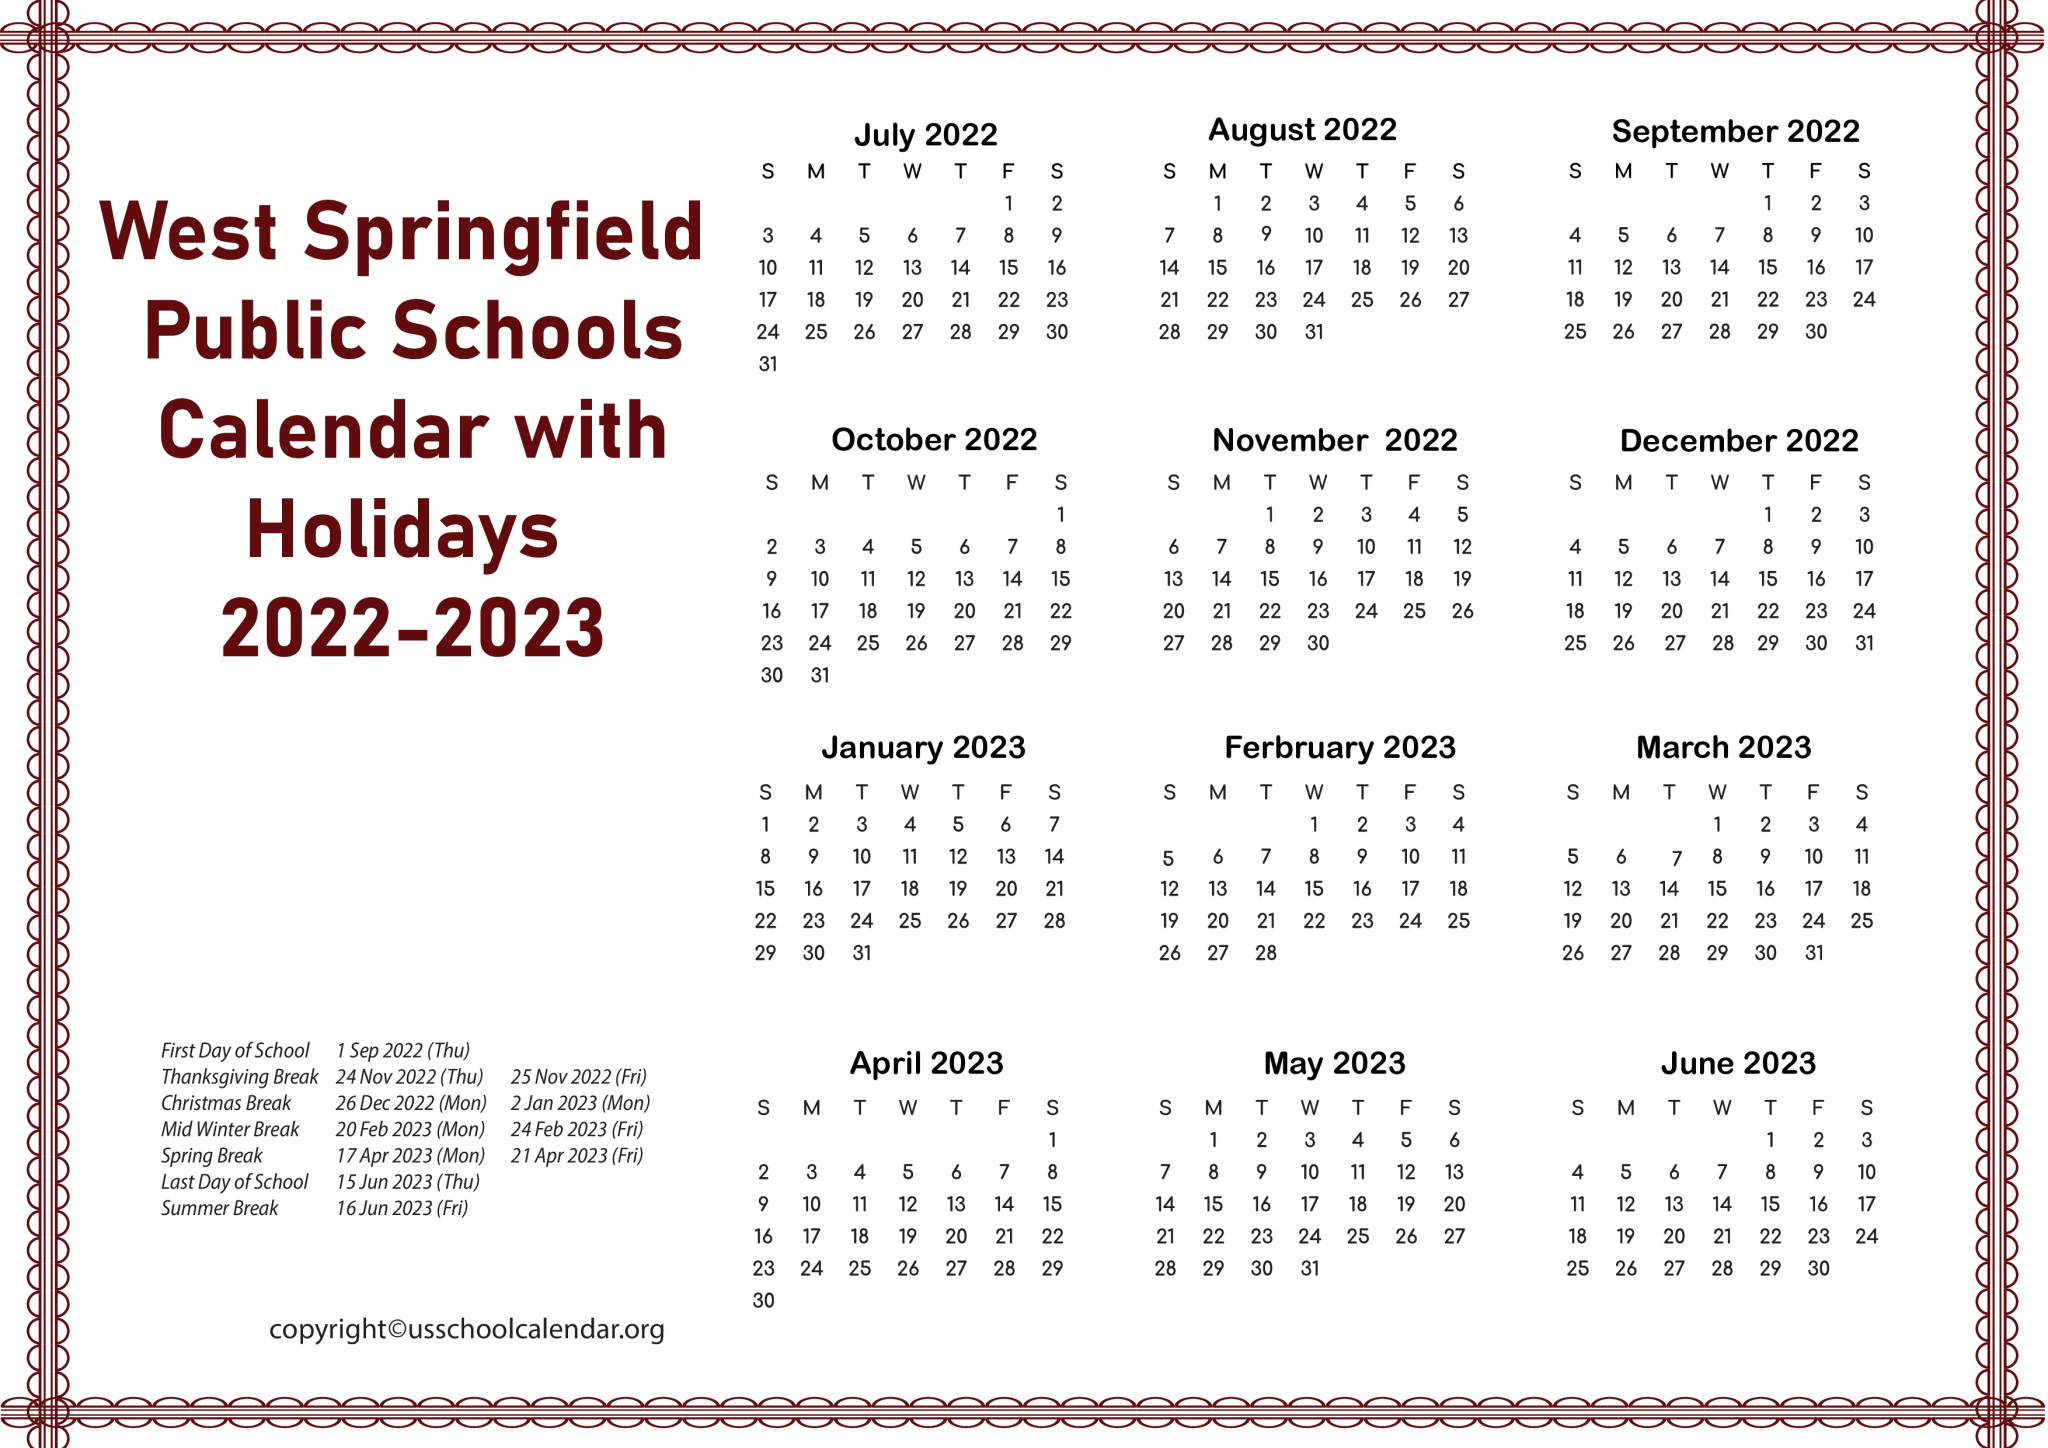 WSPS West Springfield Public Schools Calendar for 2022 2023